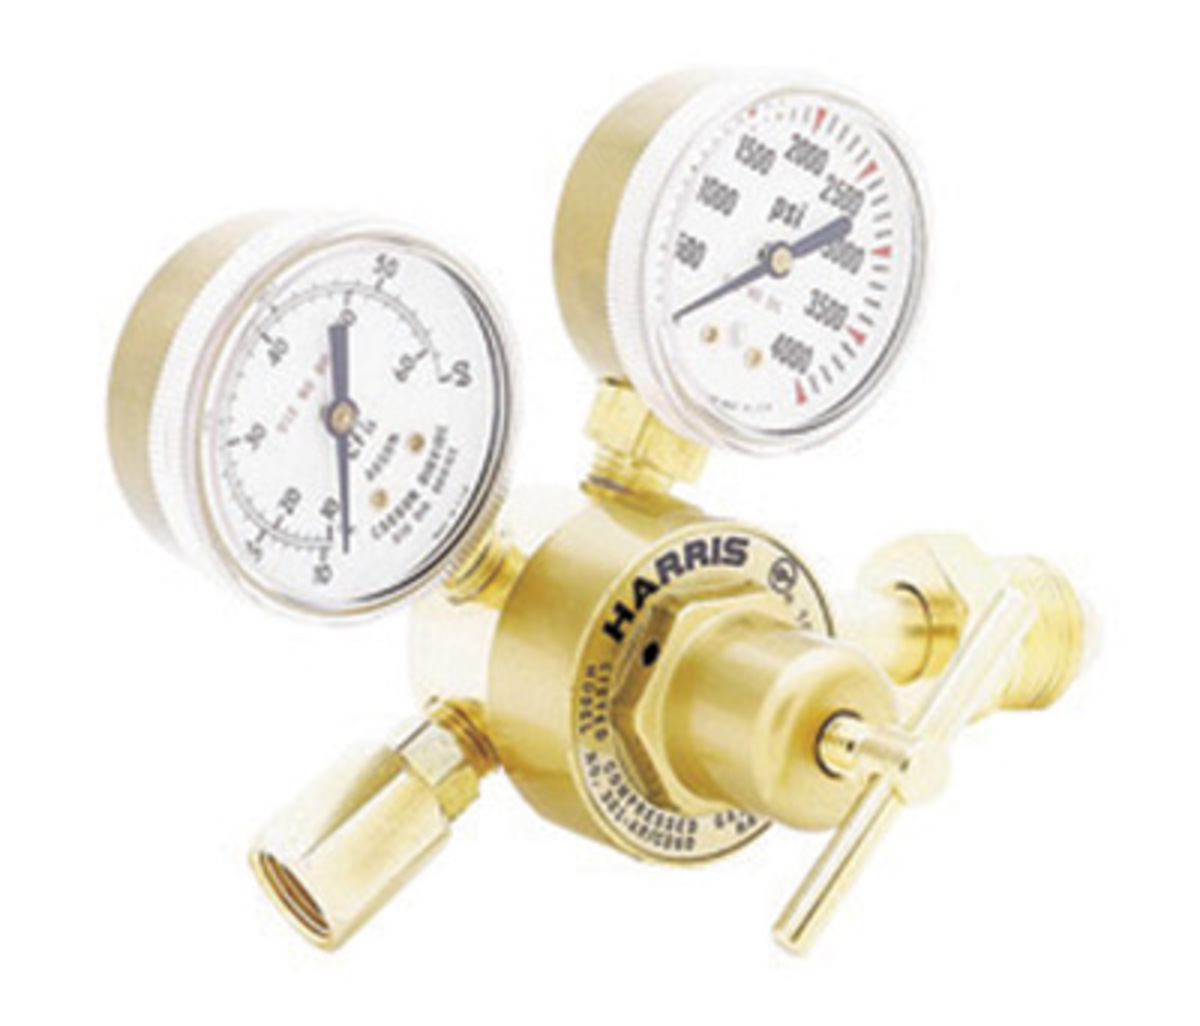 Harris 301-15-200 Pressure Regulator 0-15 PSIG